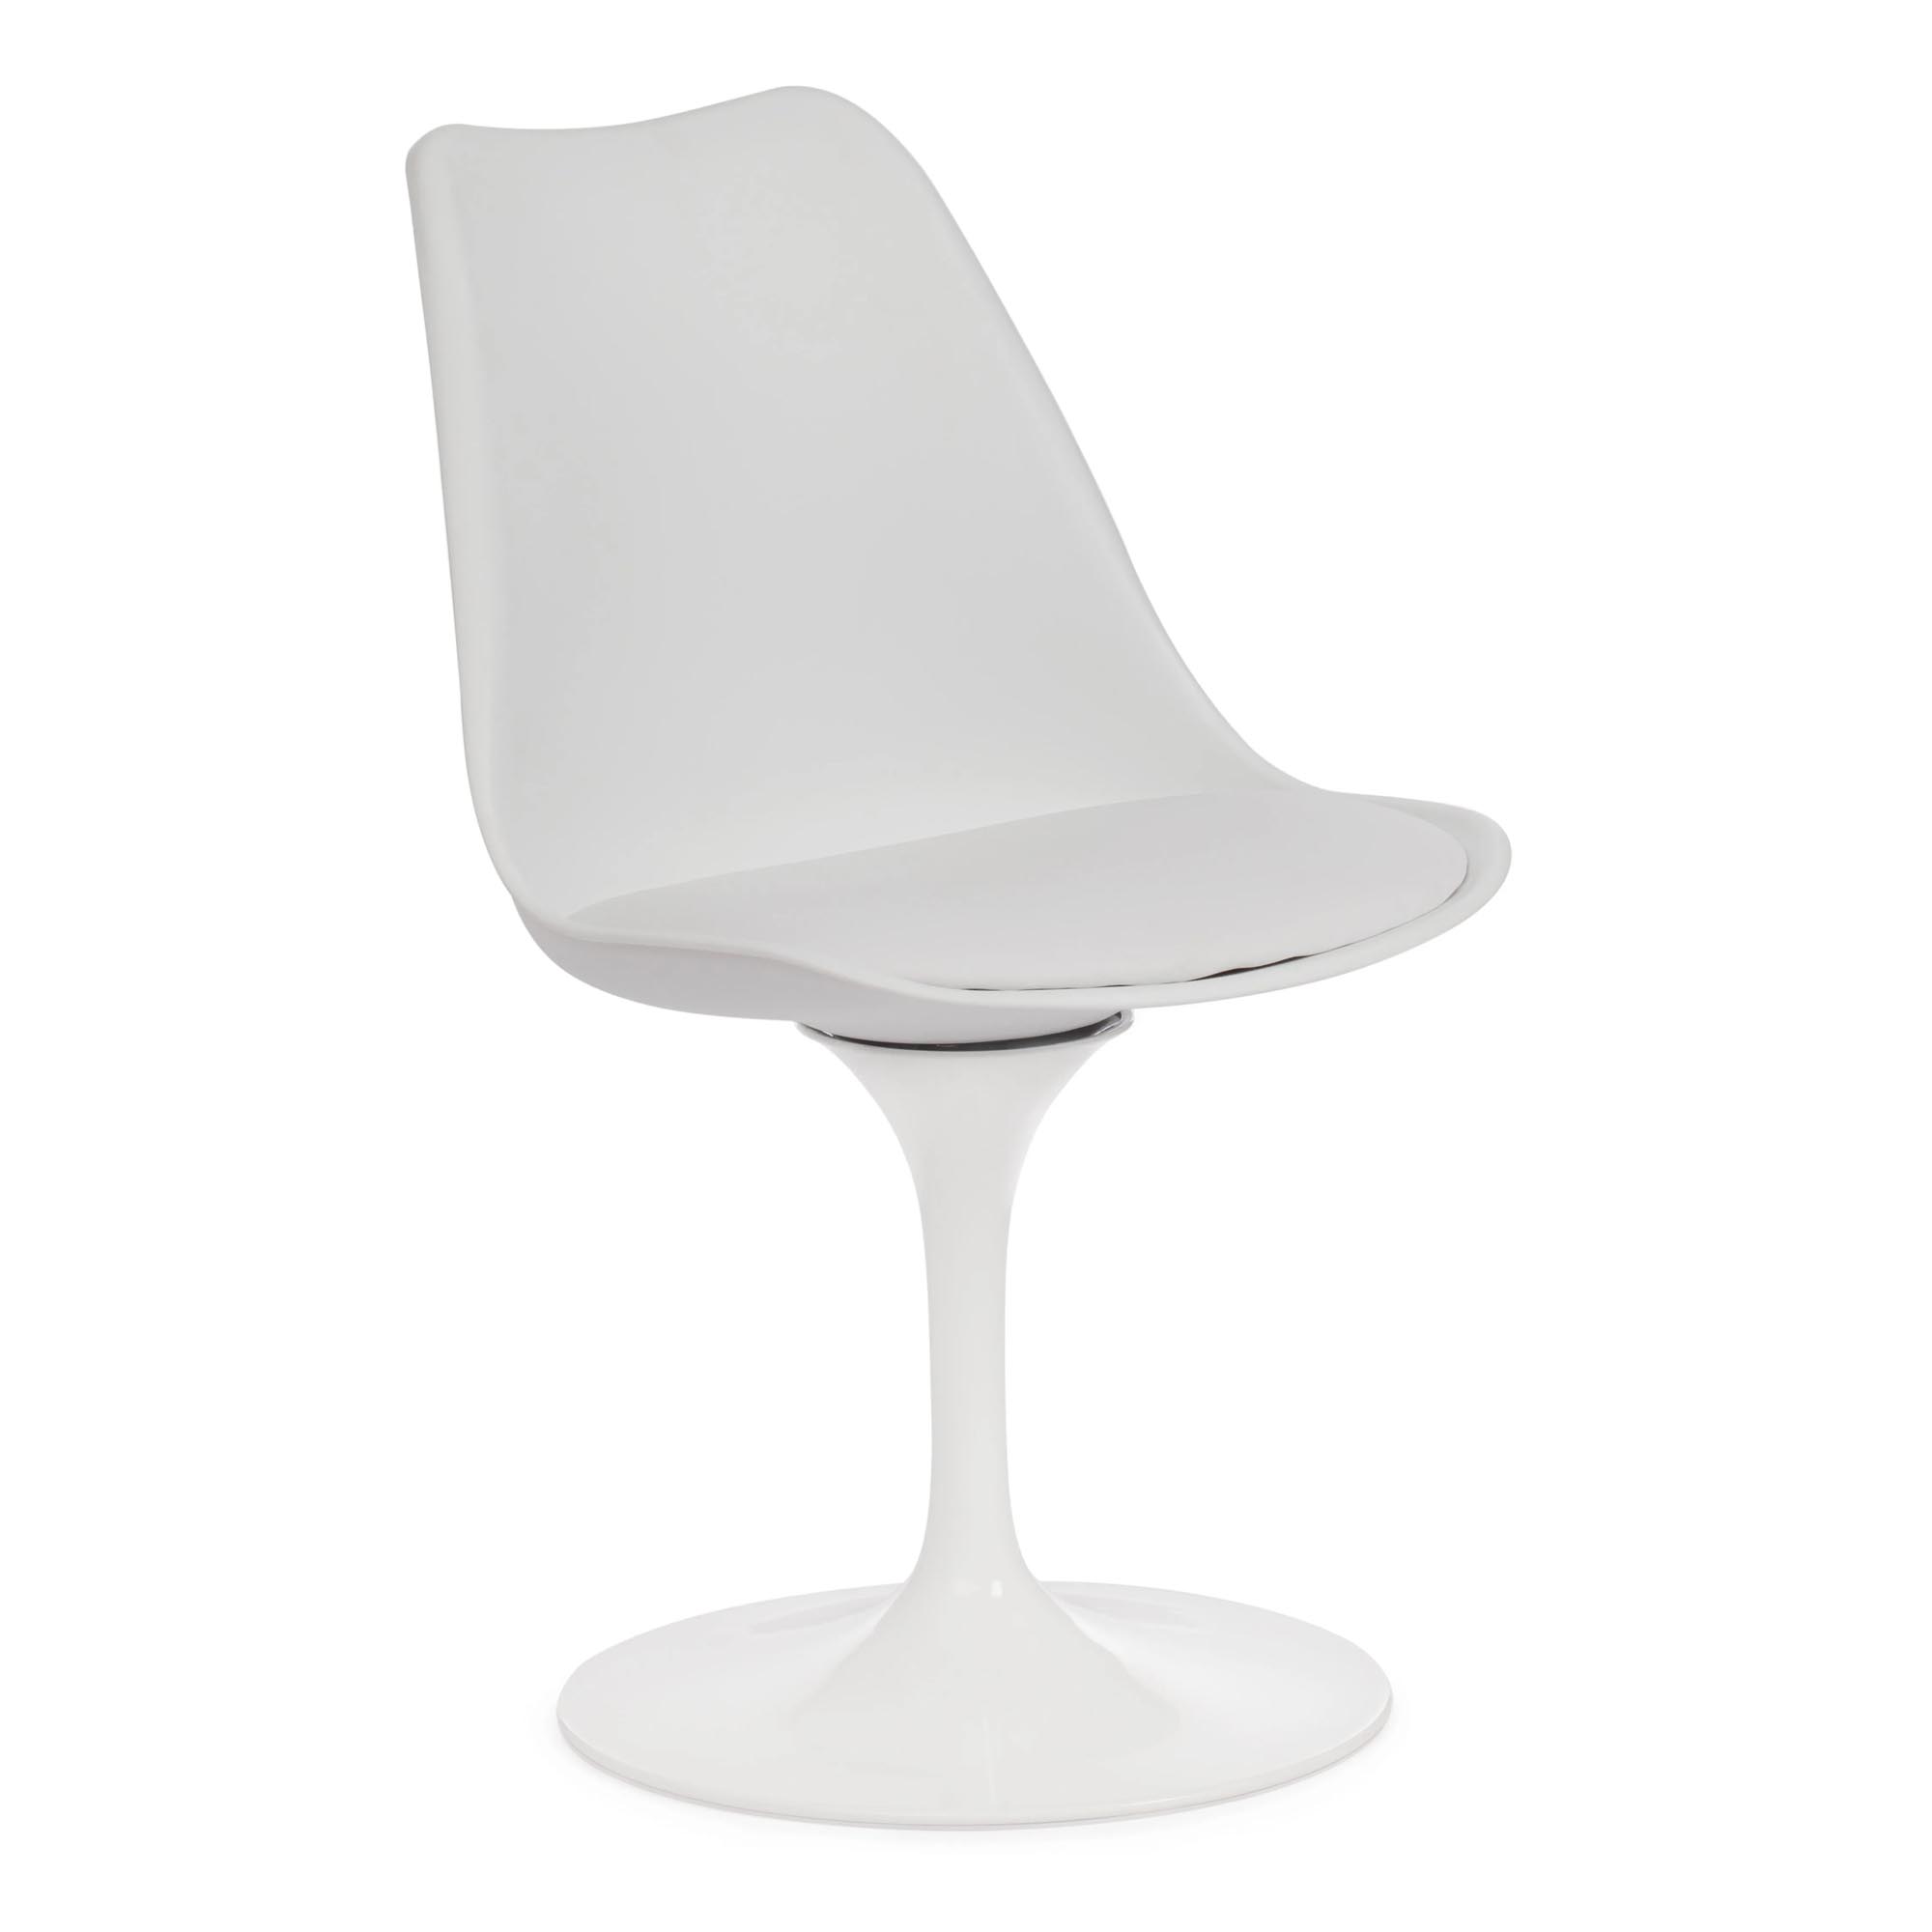 Стул TC Tulip fashion chair 55x48x81 см белый стул tc tulip fashion chair 55x48x81 см белый